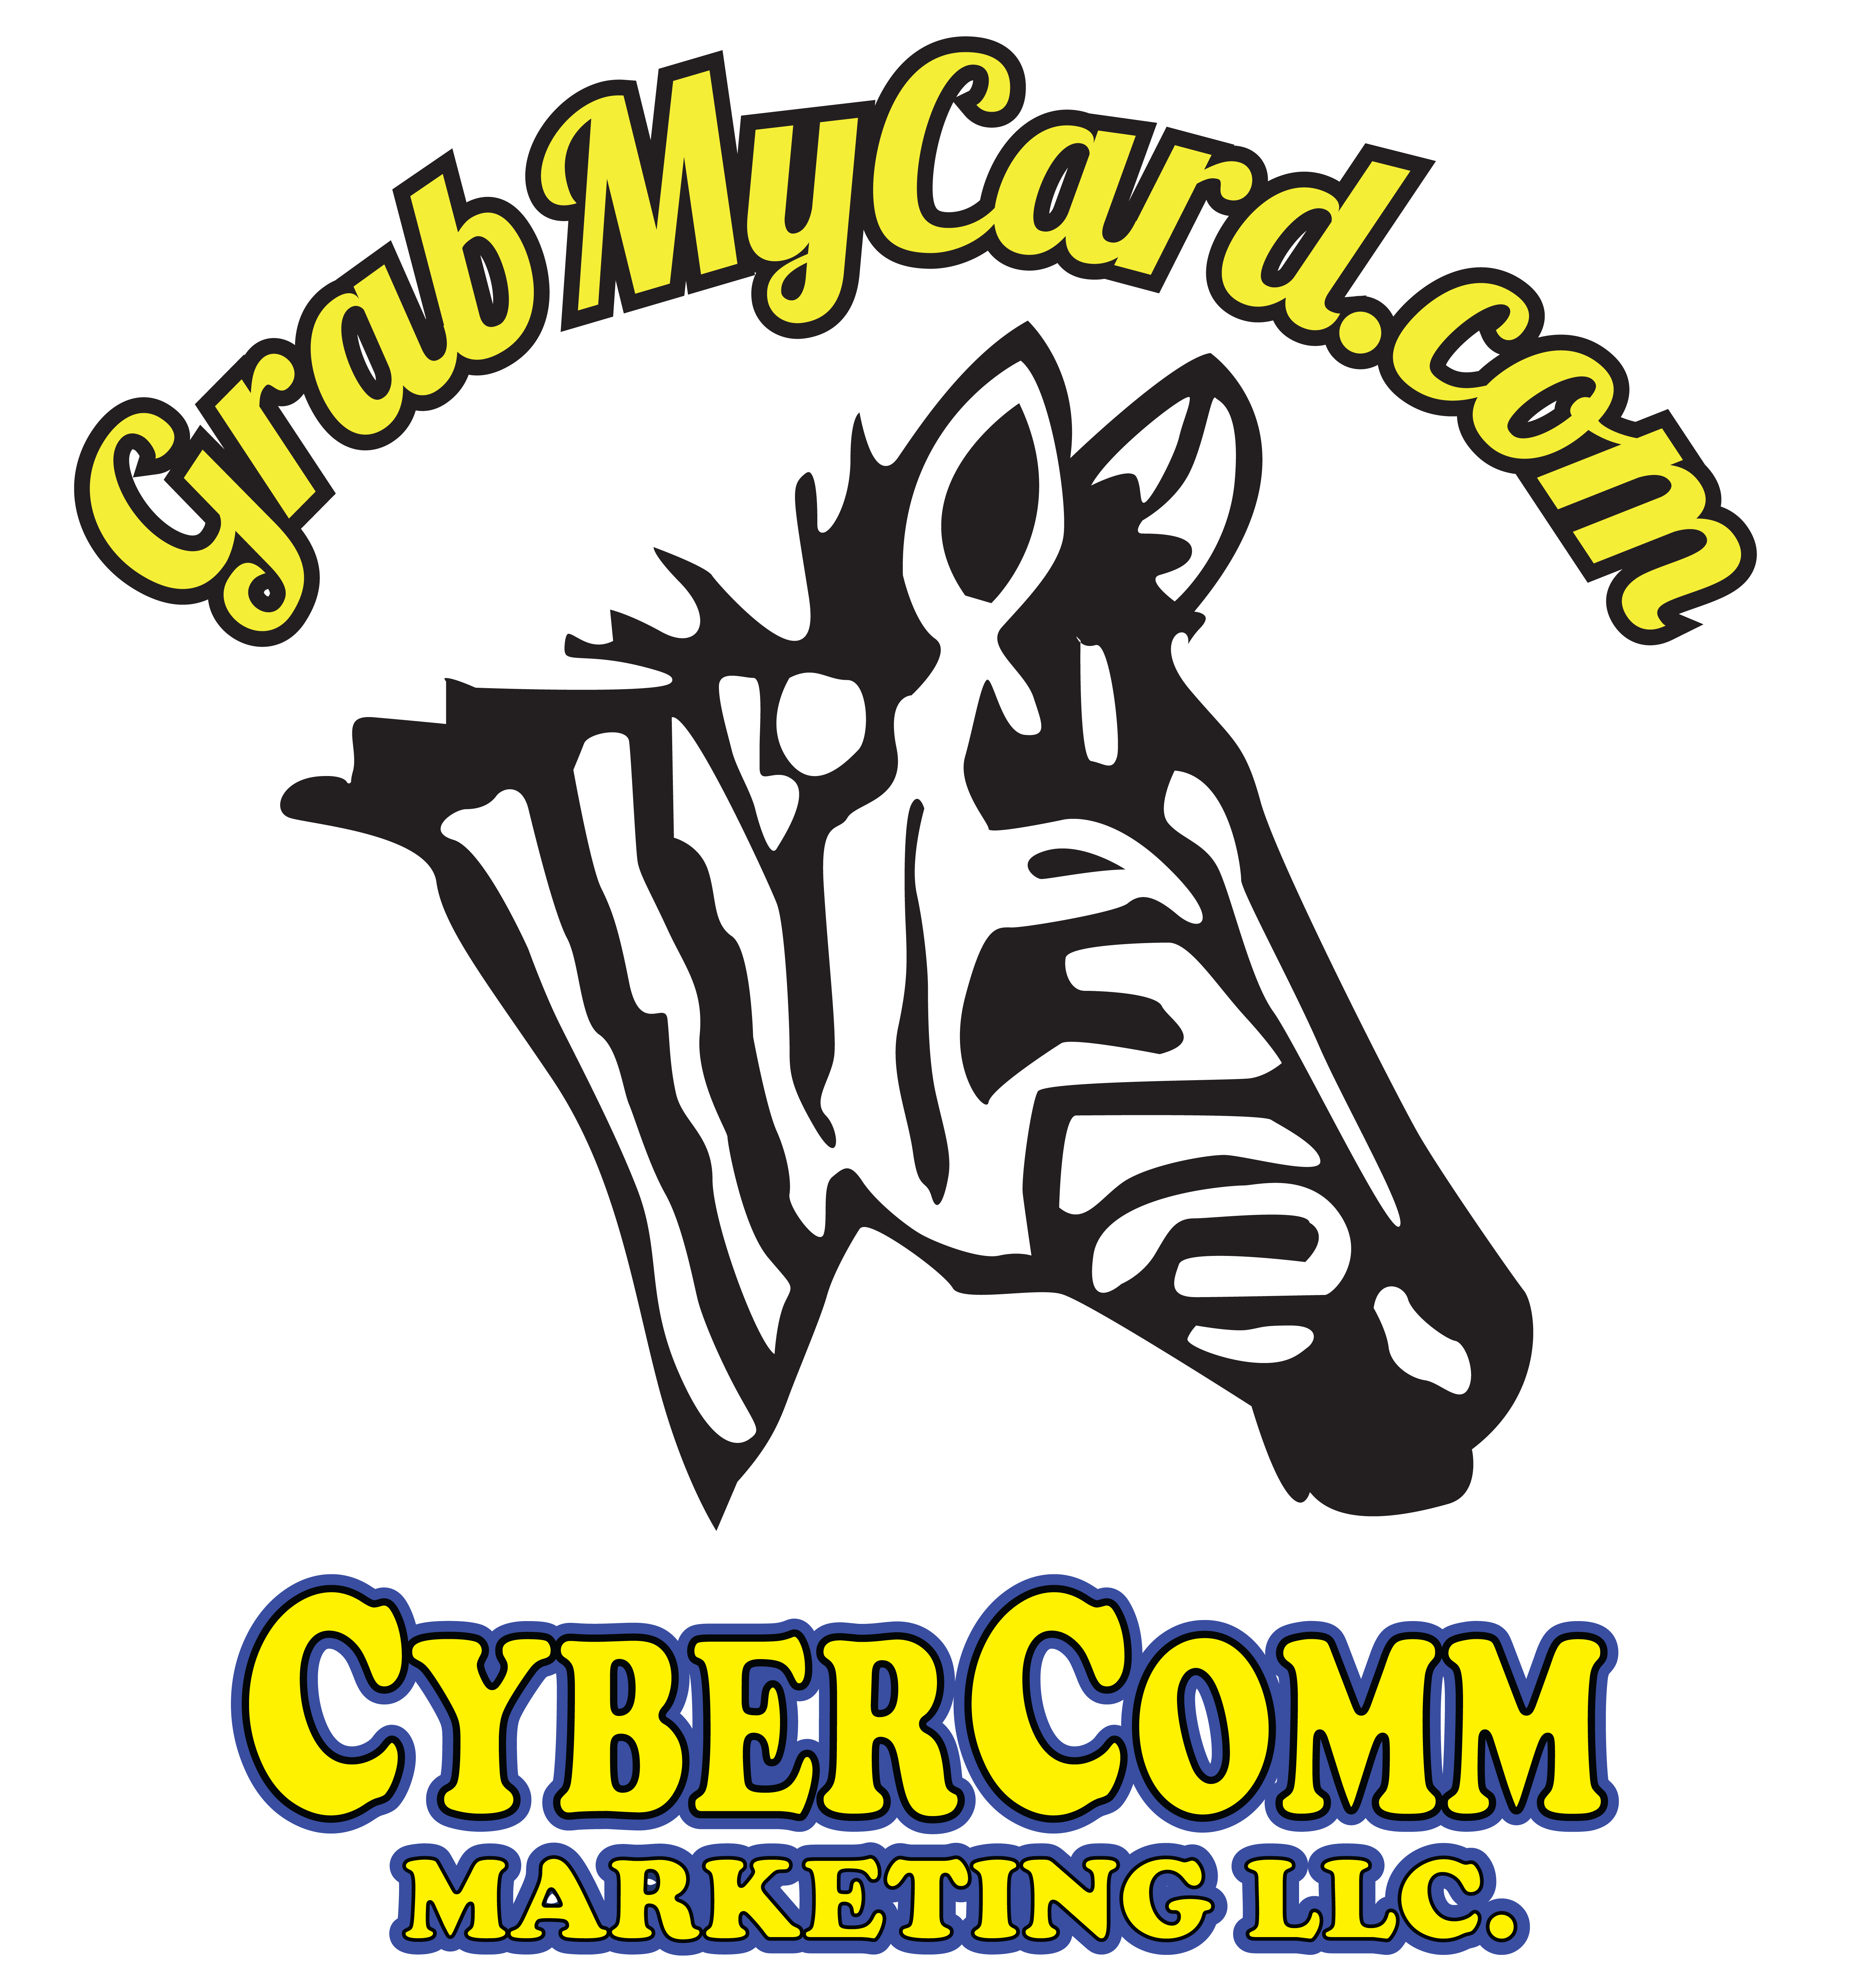 Mack Robinsons business card from CyberComm Marketing, LLC